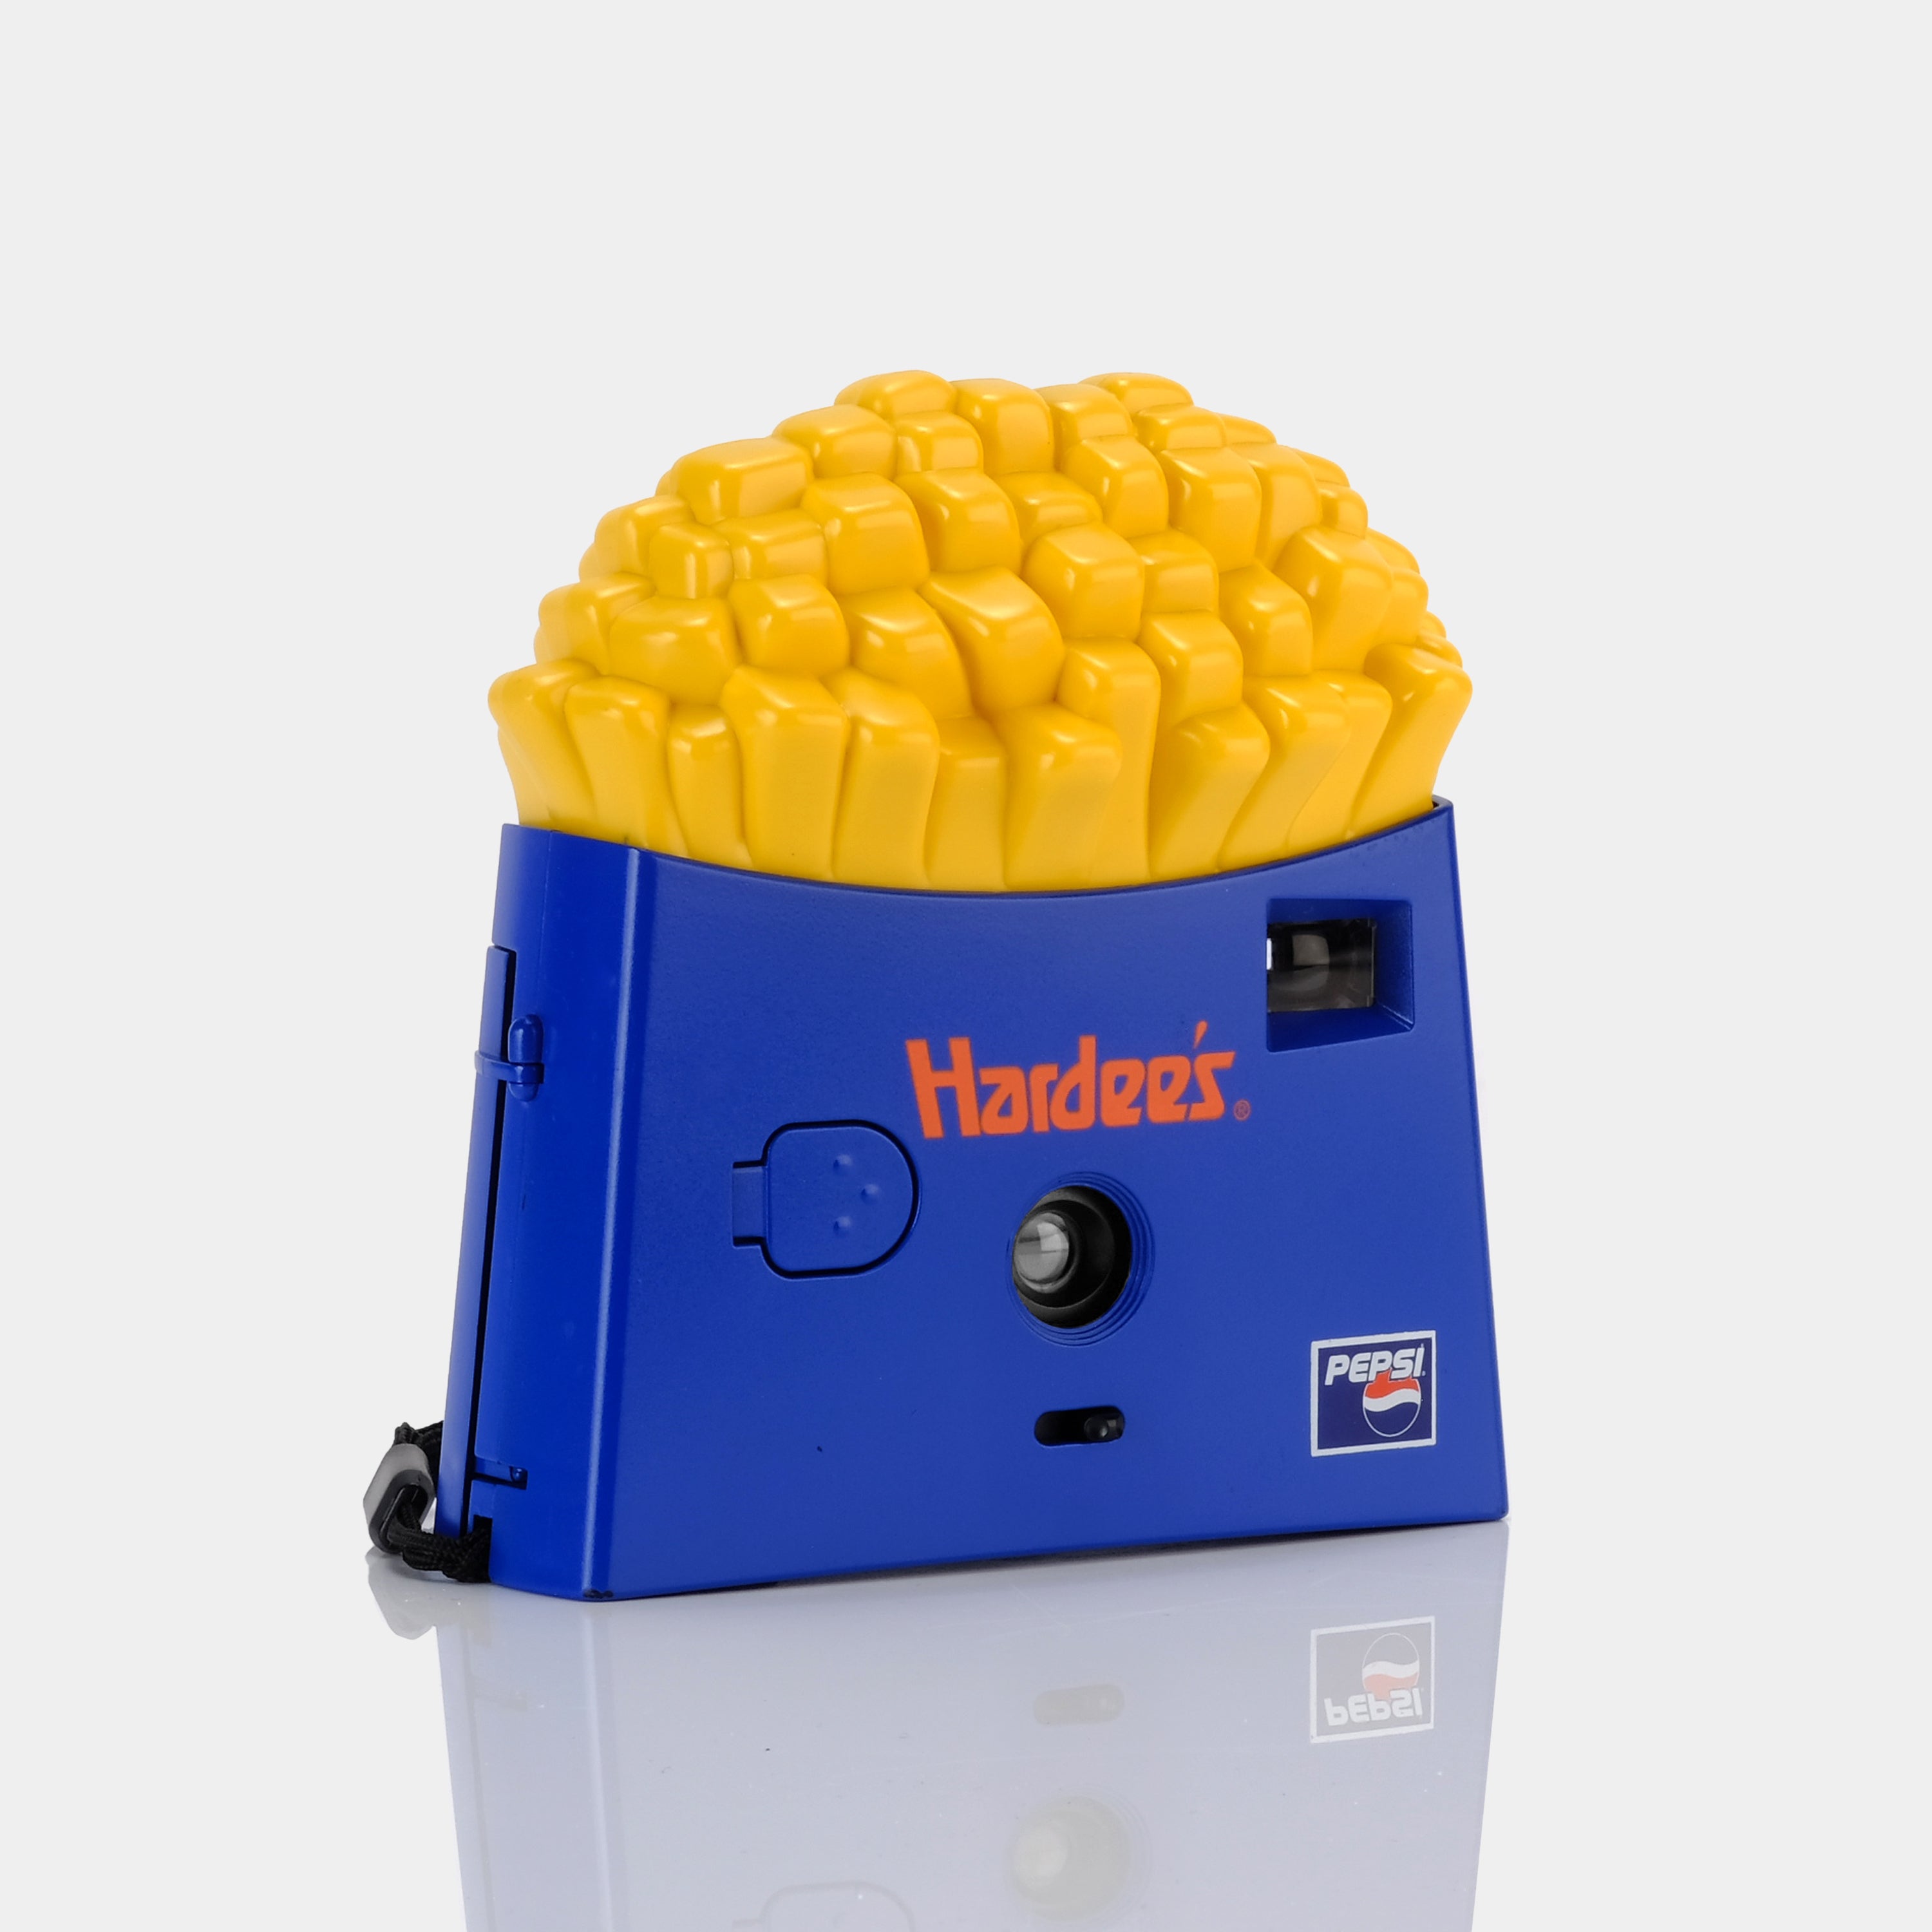 Hardee's Fries and Pepsi 35mm Film Camera